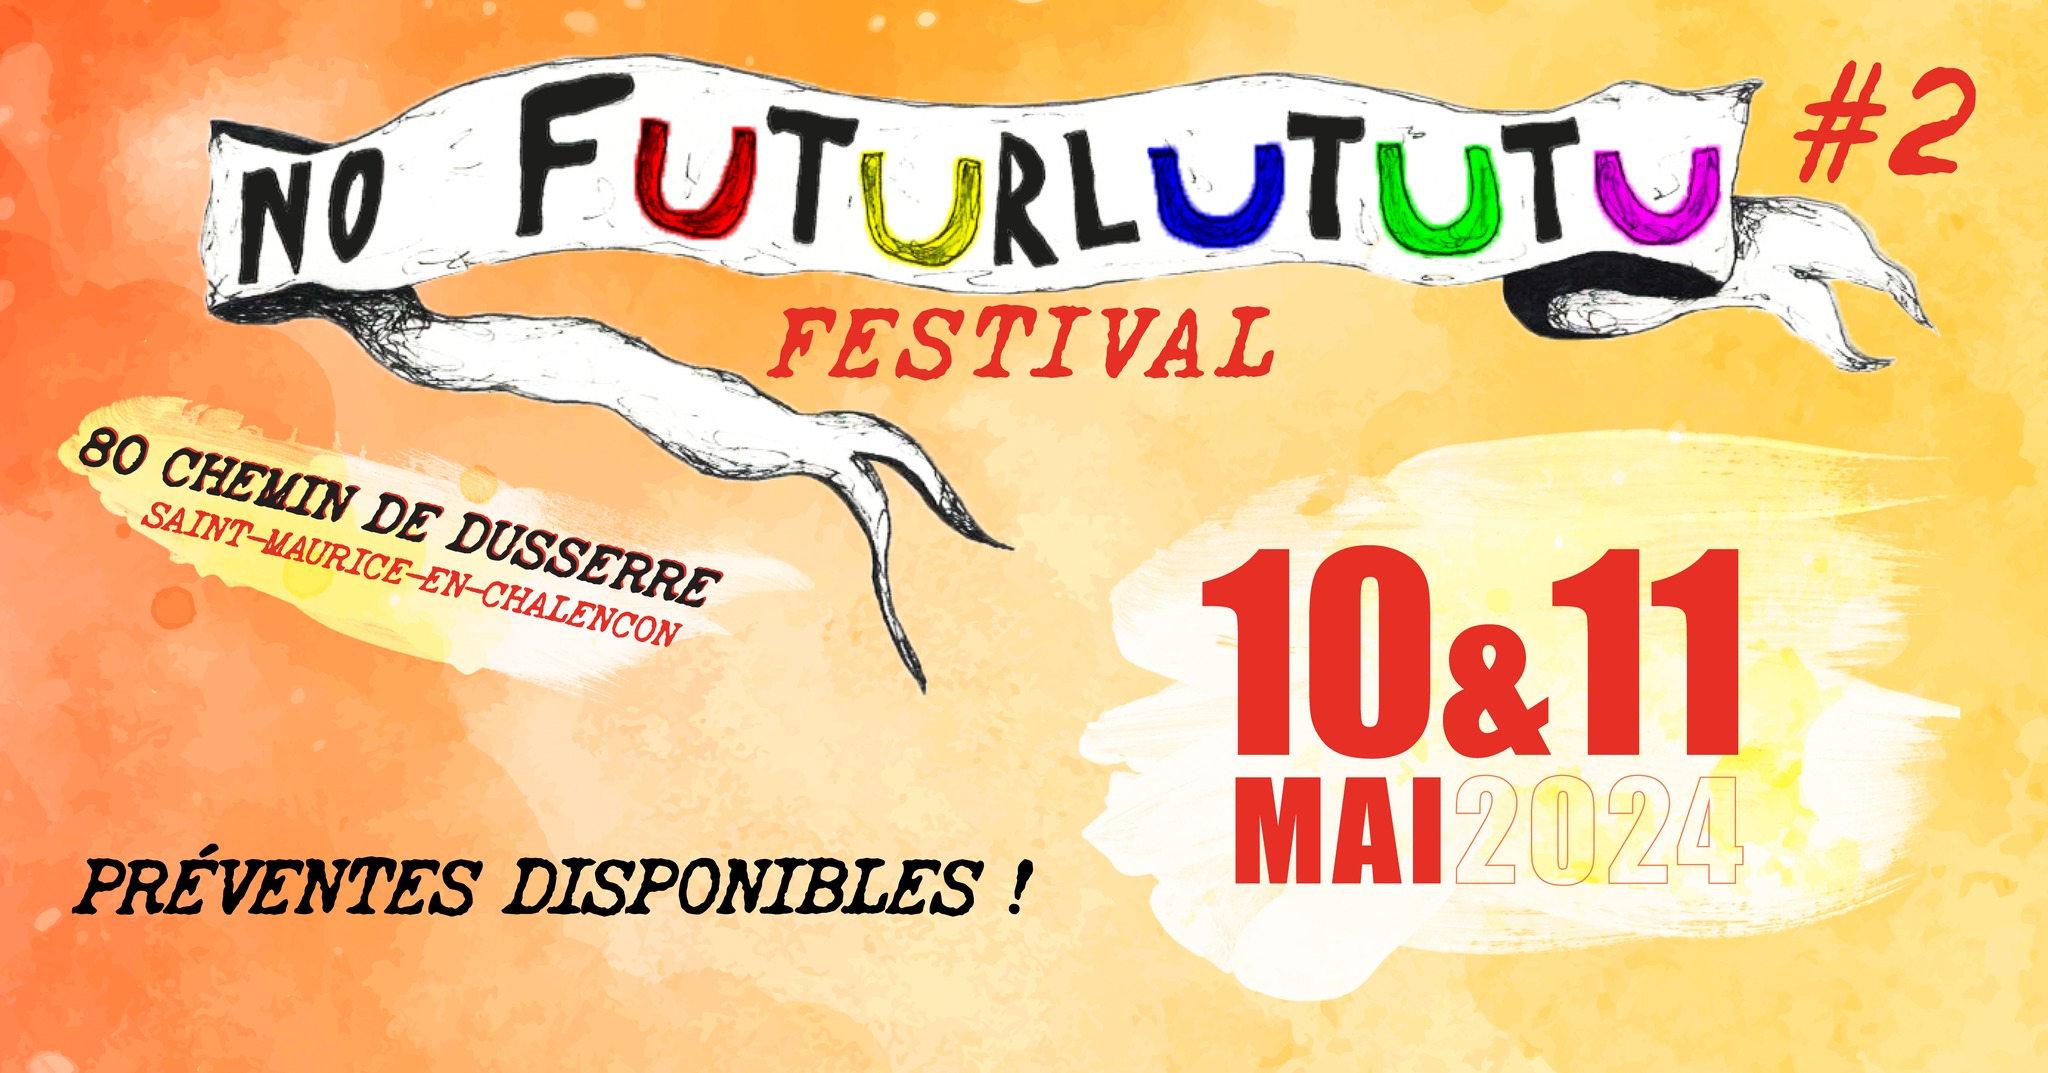 Accueil : Festival No Futurlututu (édition #2)